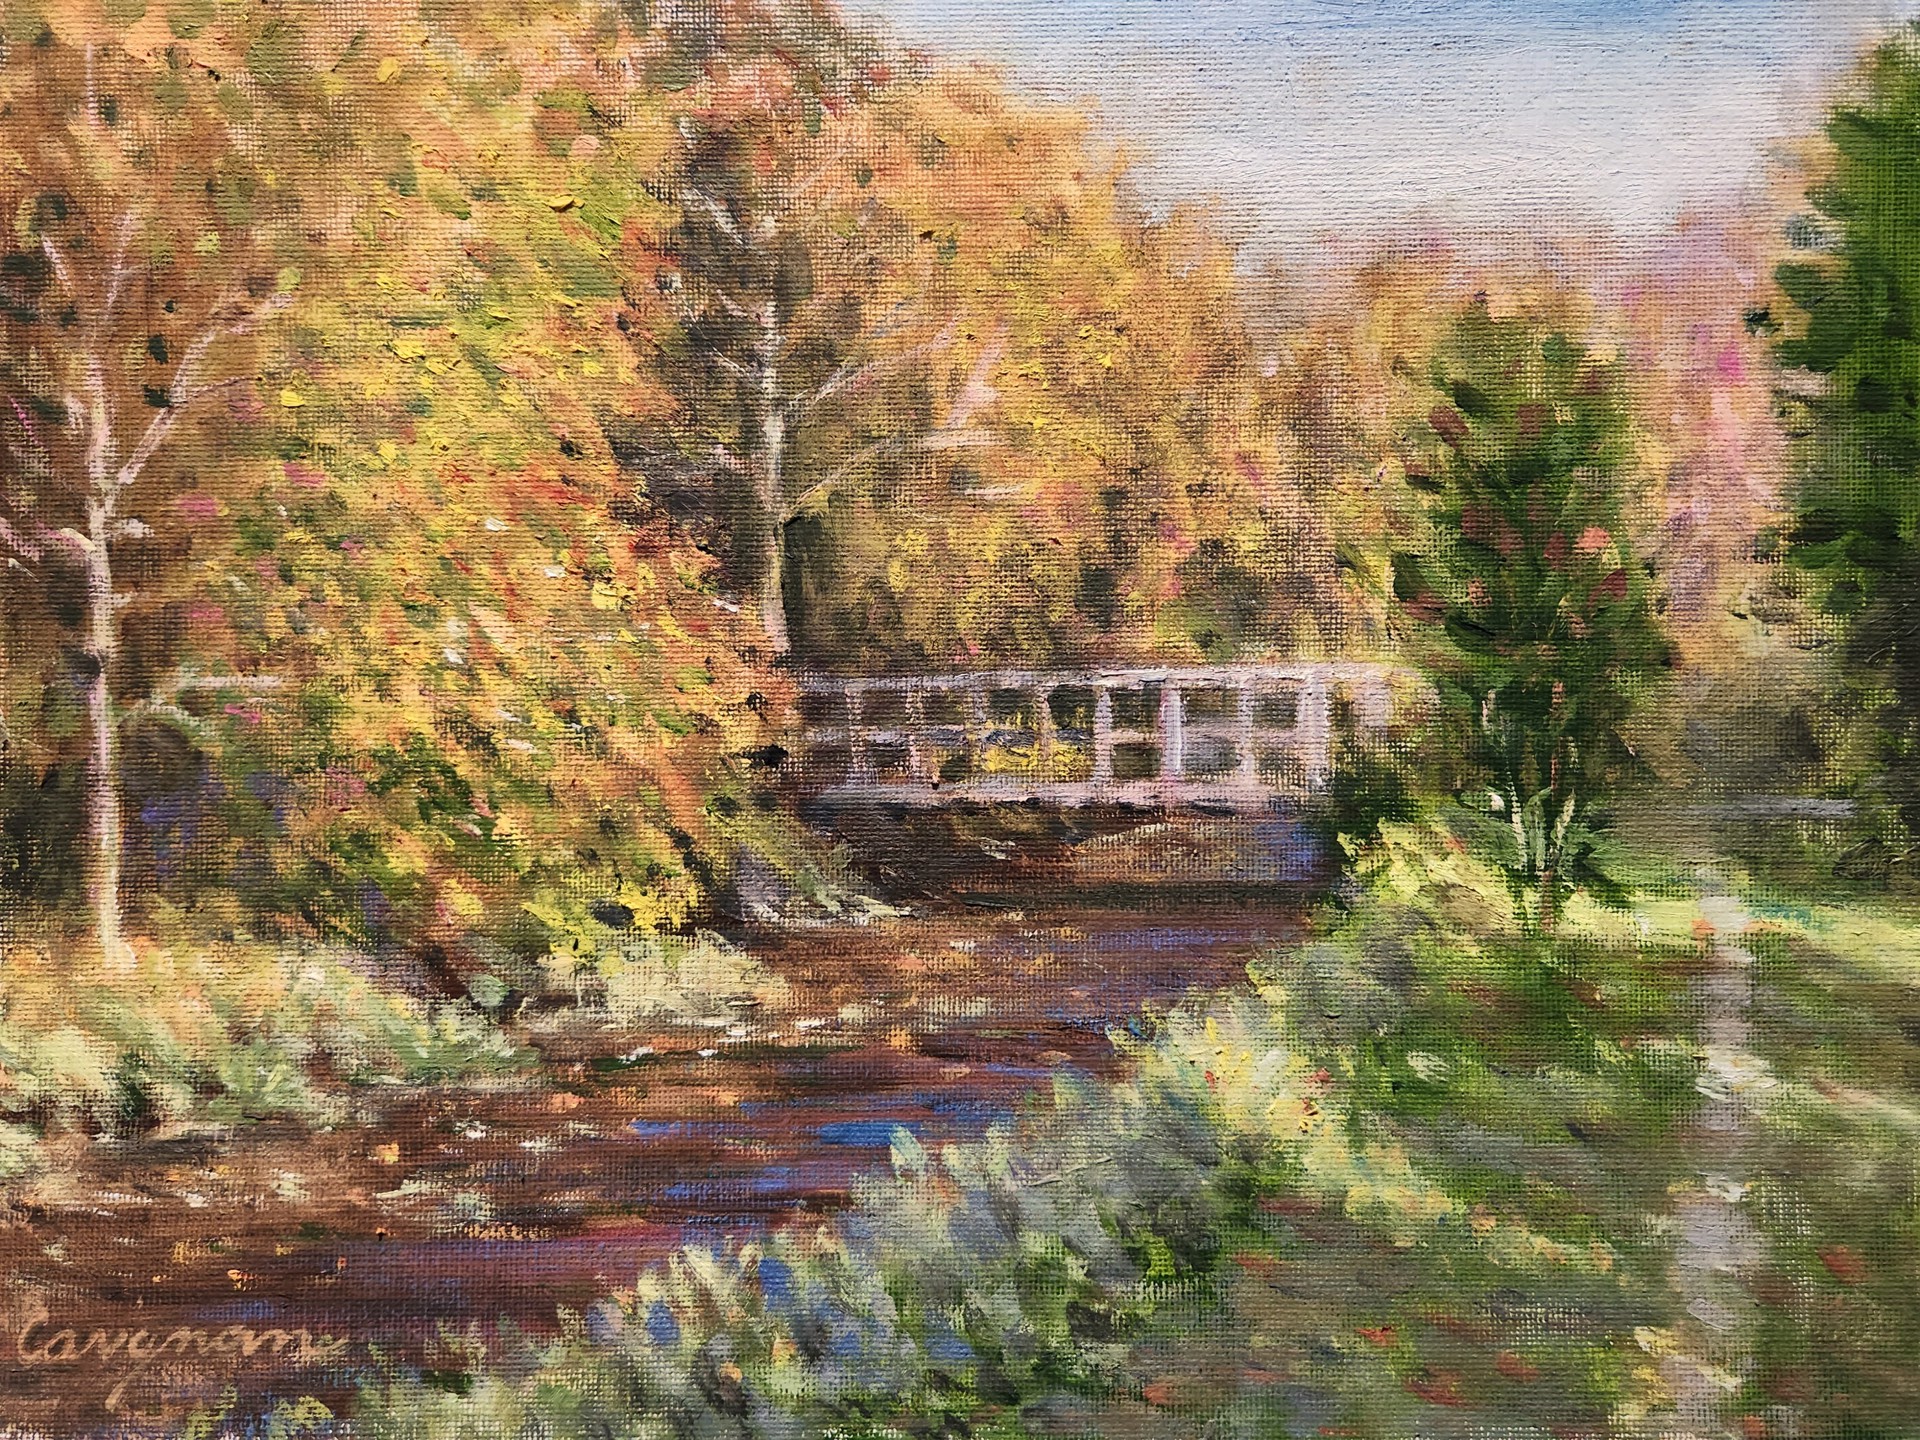 Creek Bridge In Autumn by Todd Carignan